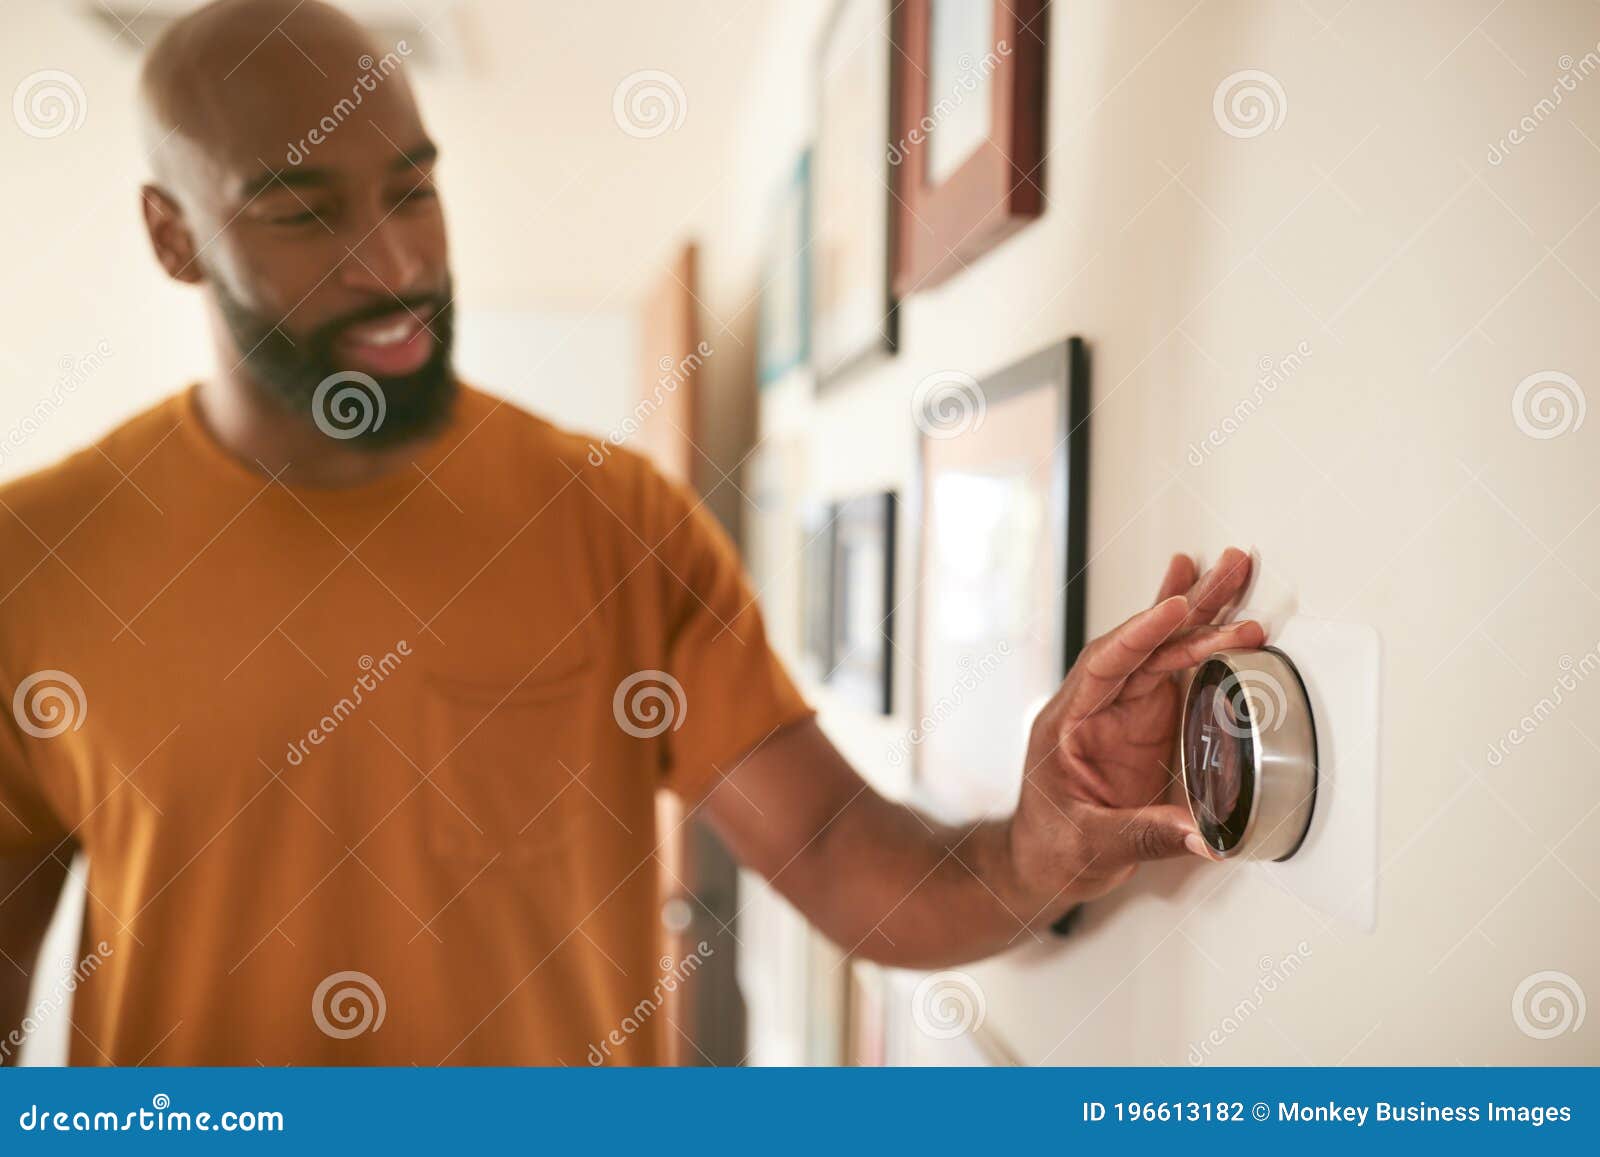 man adjusting digital central heating thermostat at home